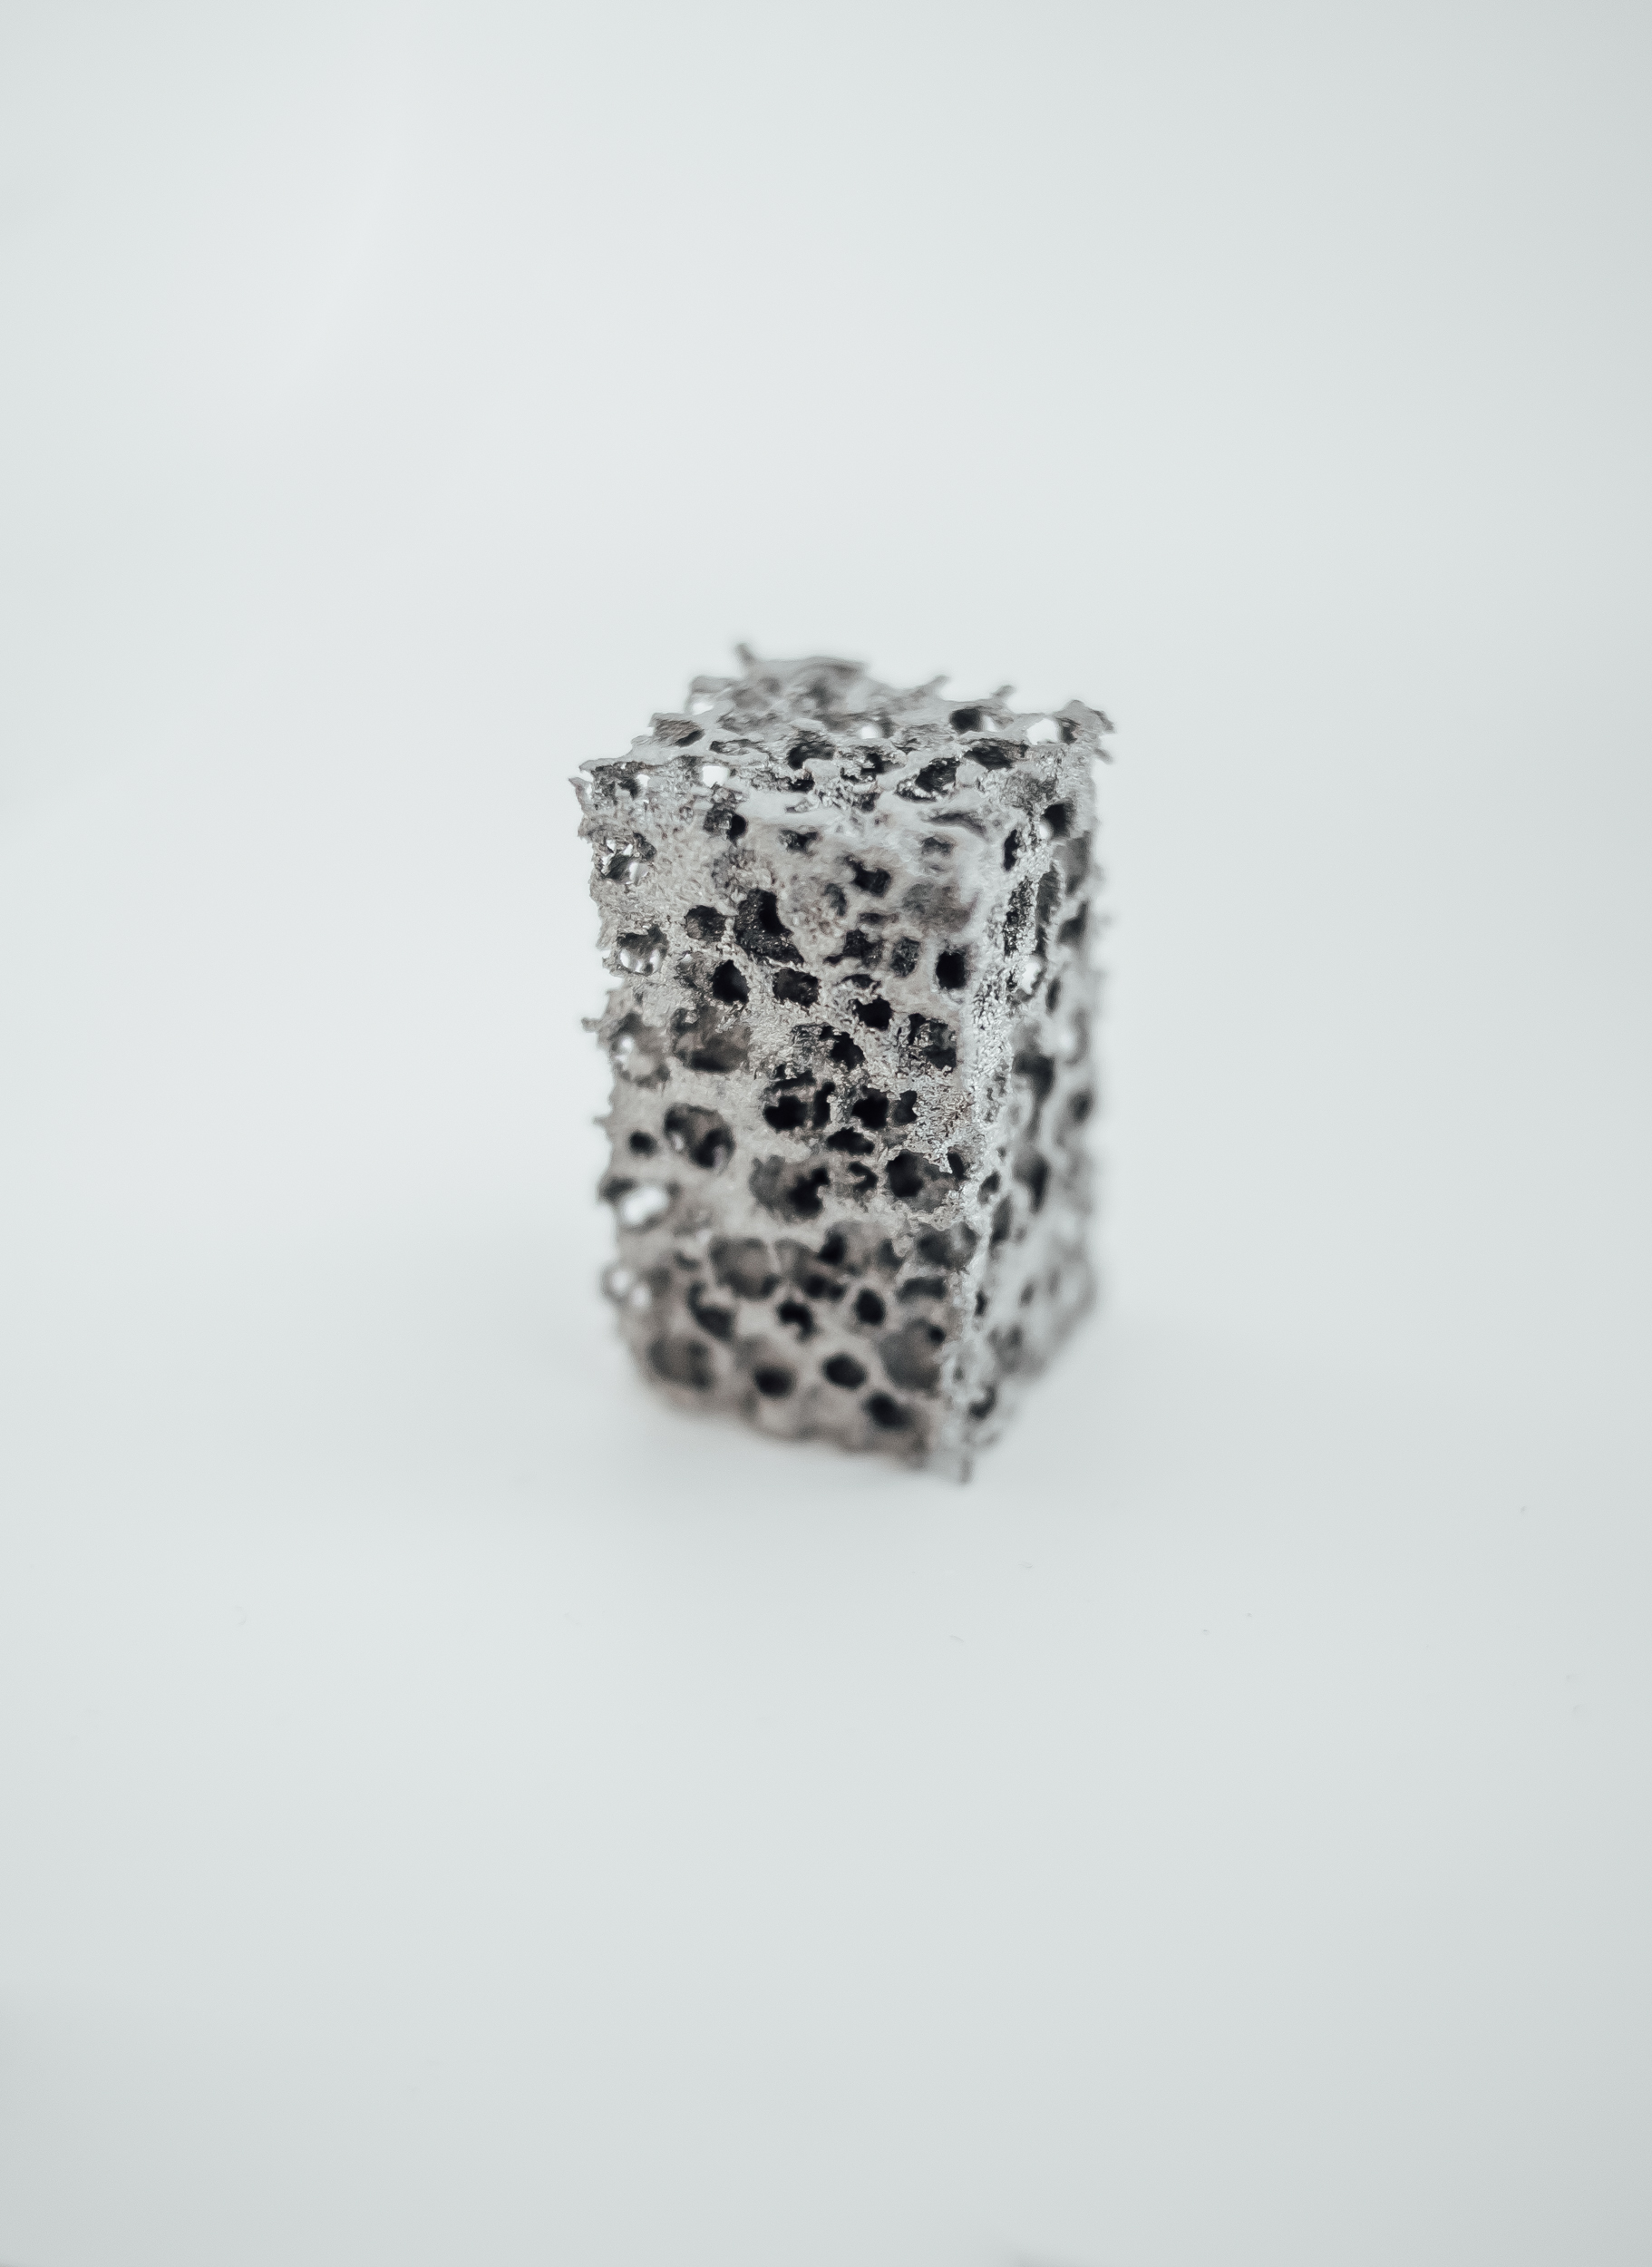 Artifact: Idealised metal foam (cover image)